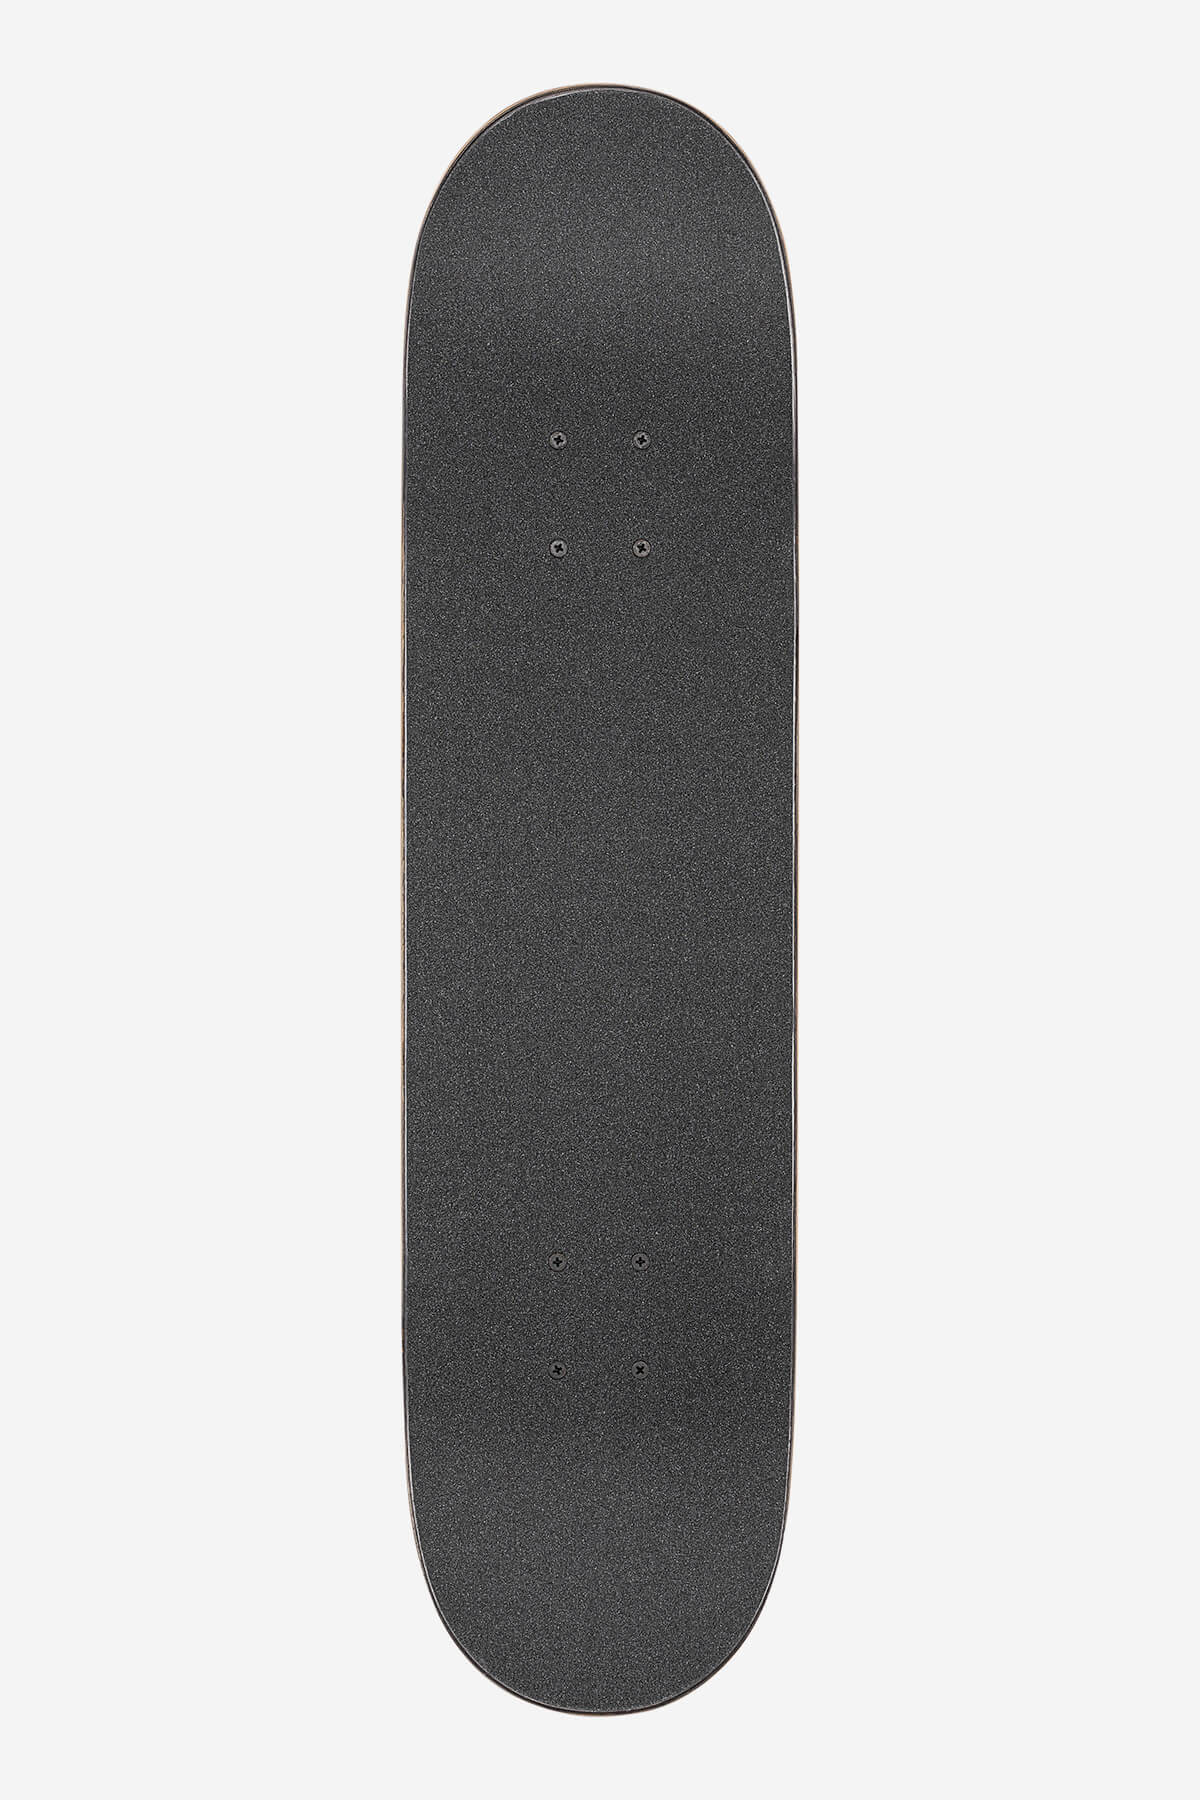 g1 ablaze black dye 8.0" complete skateboard